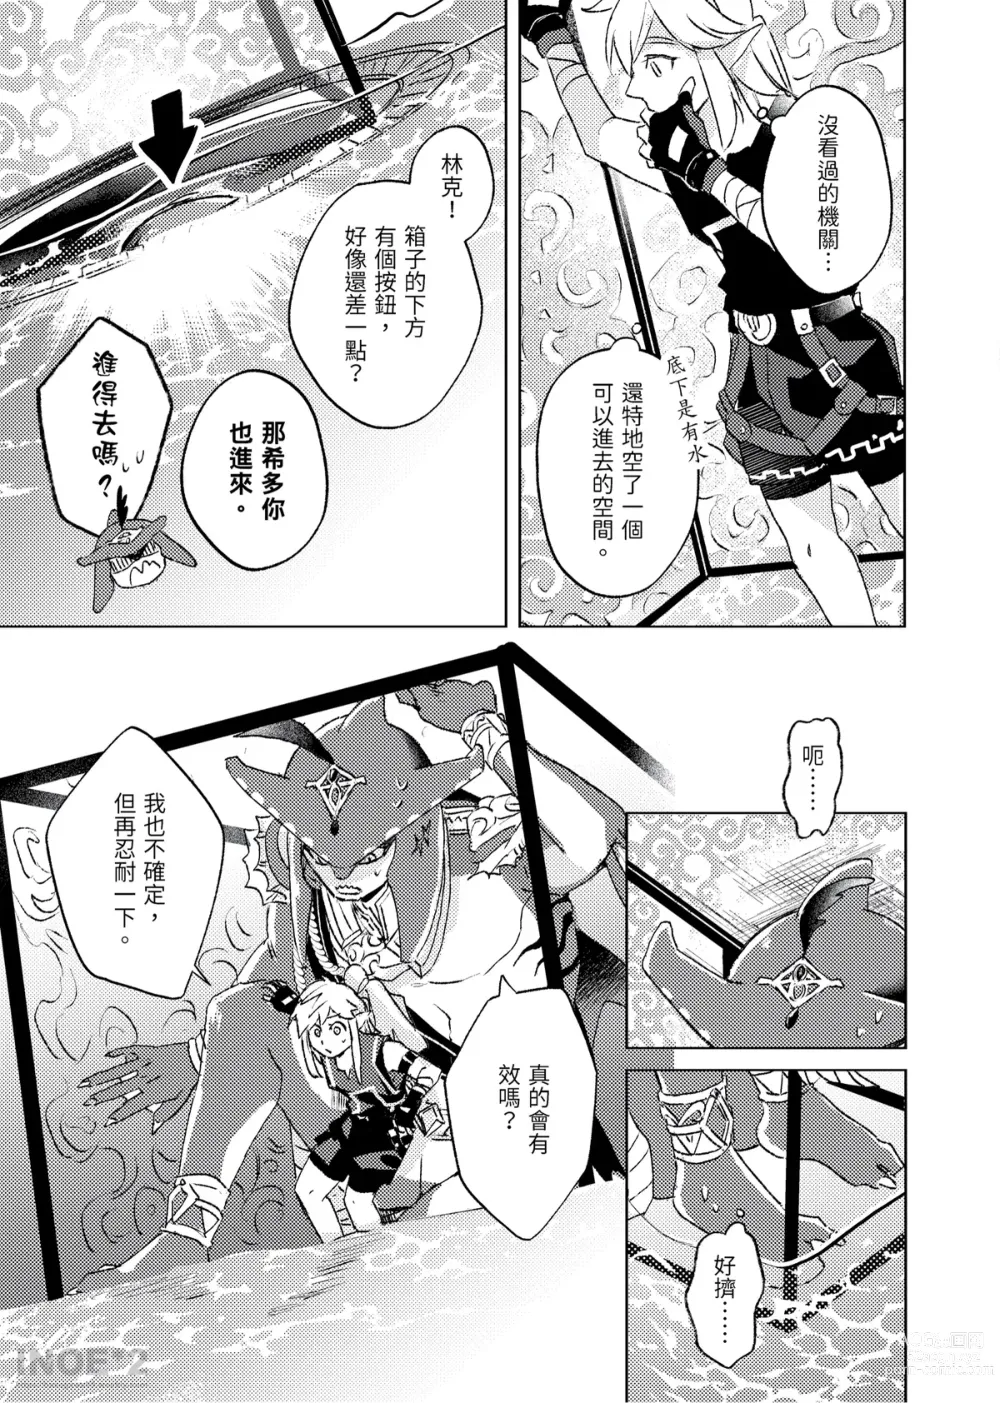 Page 9 of doujinshi LOCK UP